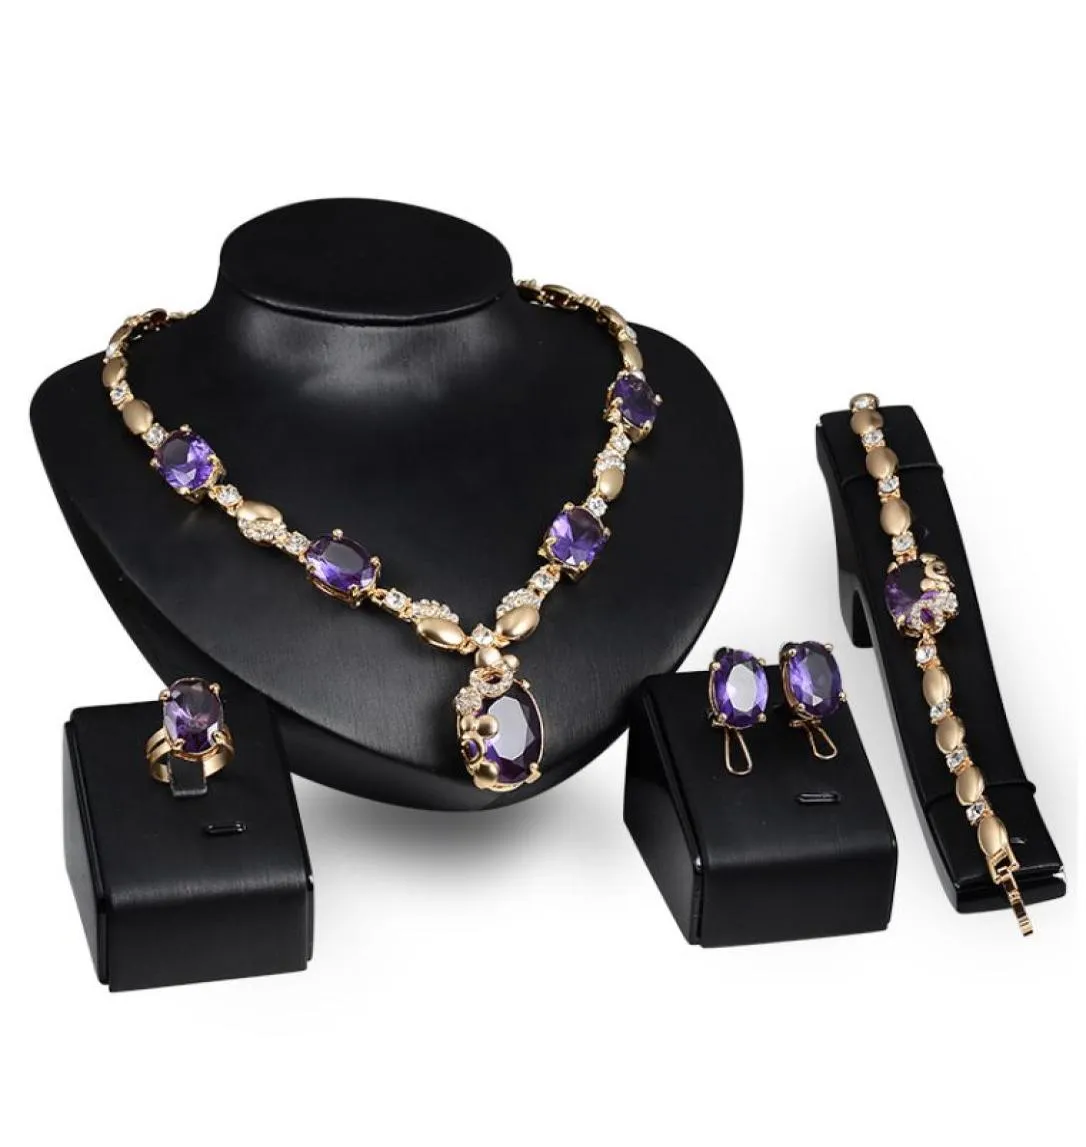 Rings Necklaces Bracelets Earrings Jewelry Set Fashion Royal Imitation Gemstone 18K Gold Plated Party Jewelry 4 piece Set Wholesal4502028